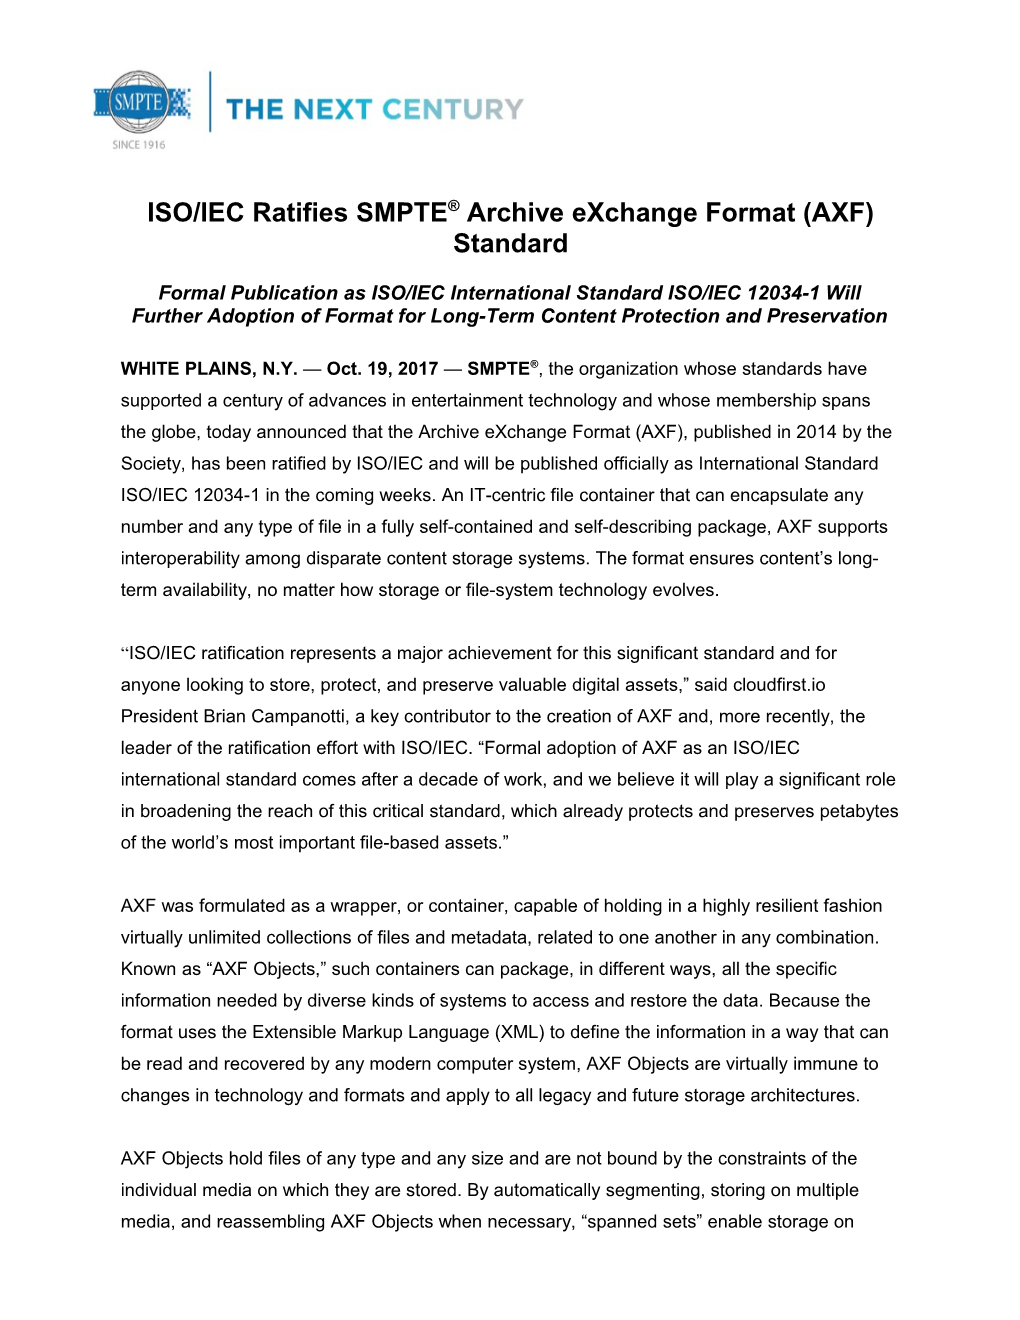 SMPTE Press Release s1